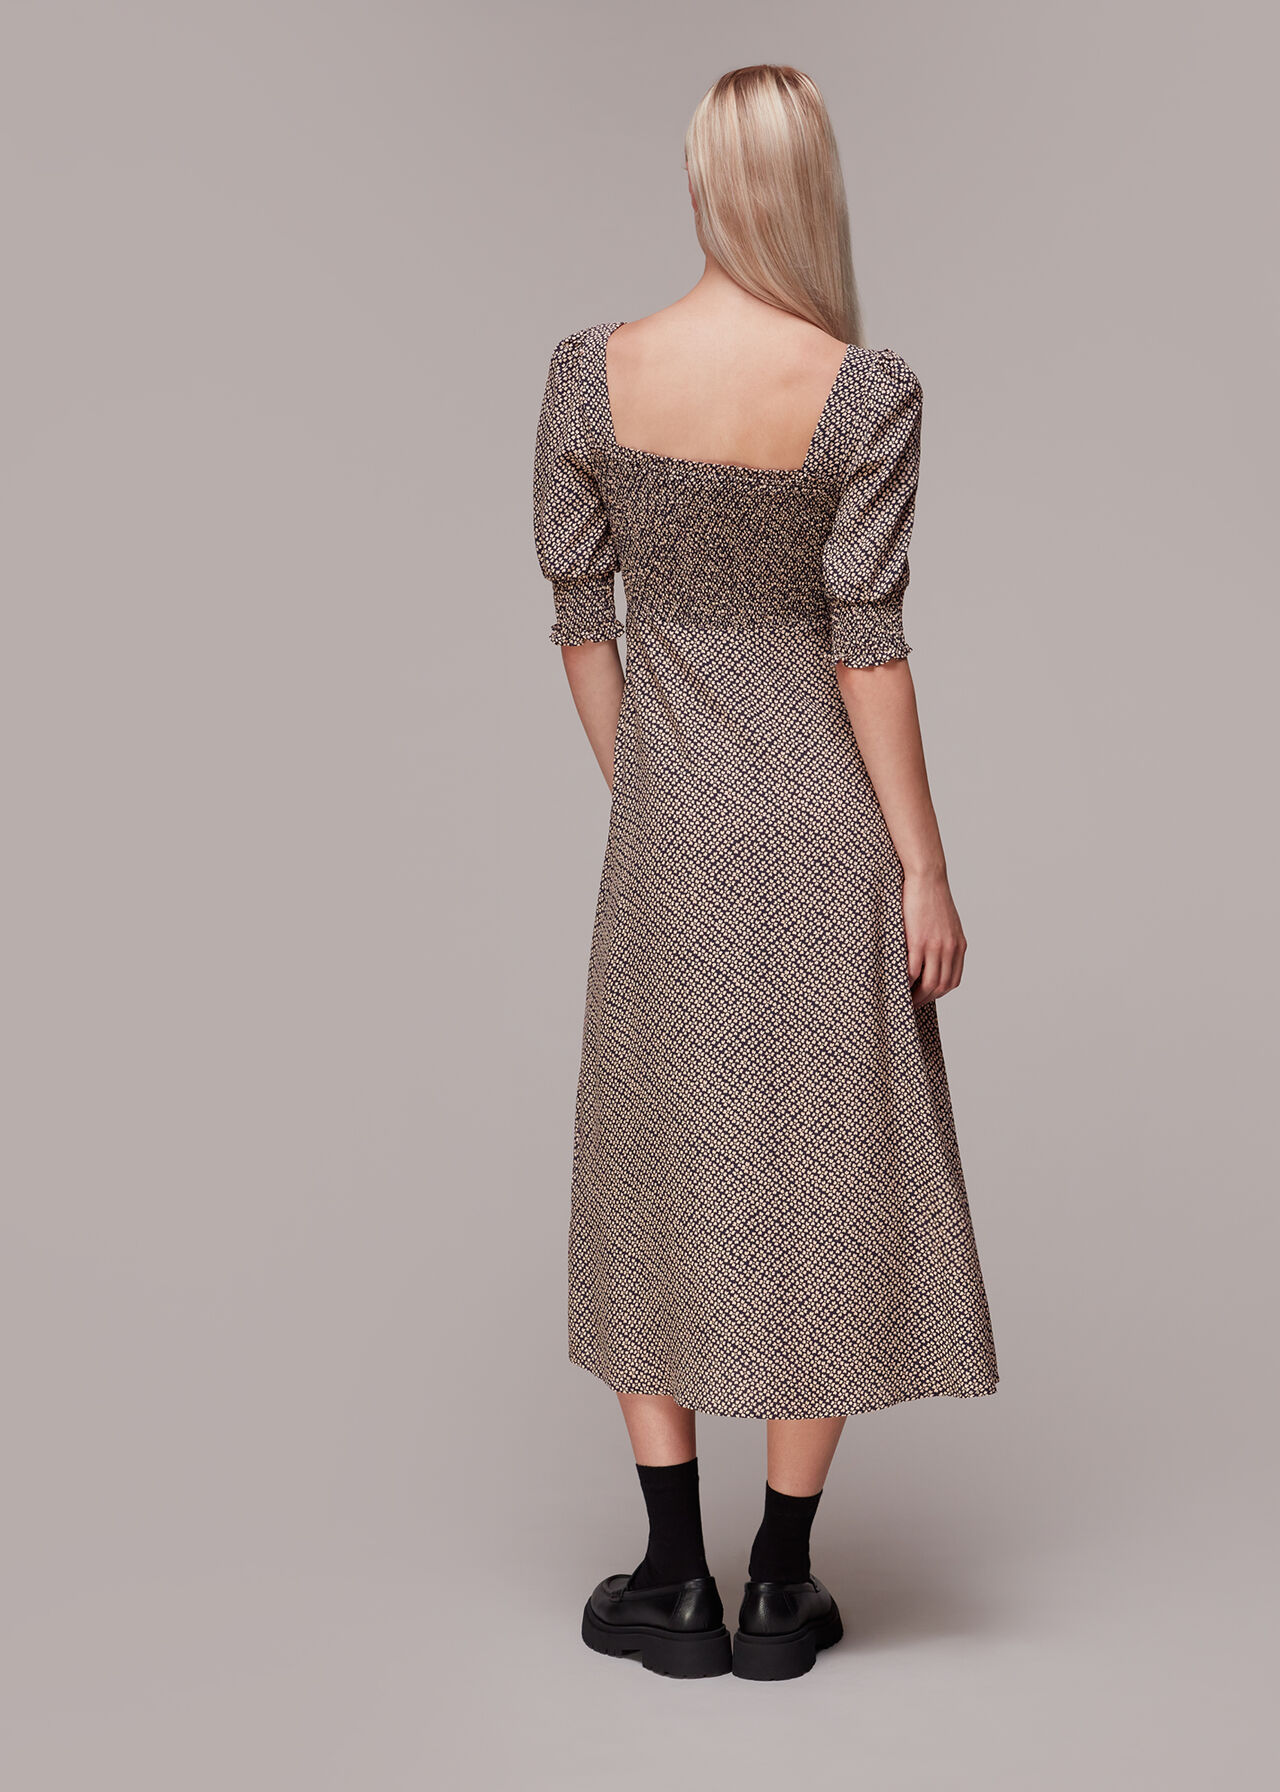 Clover Print Shirred Dress